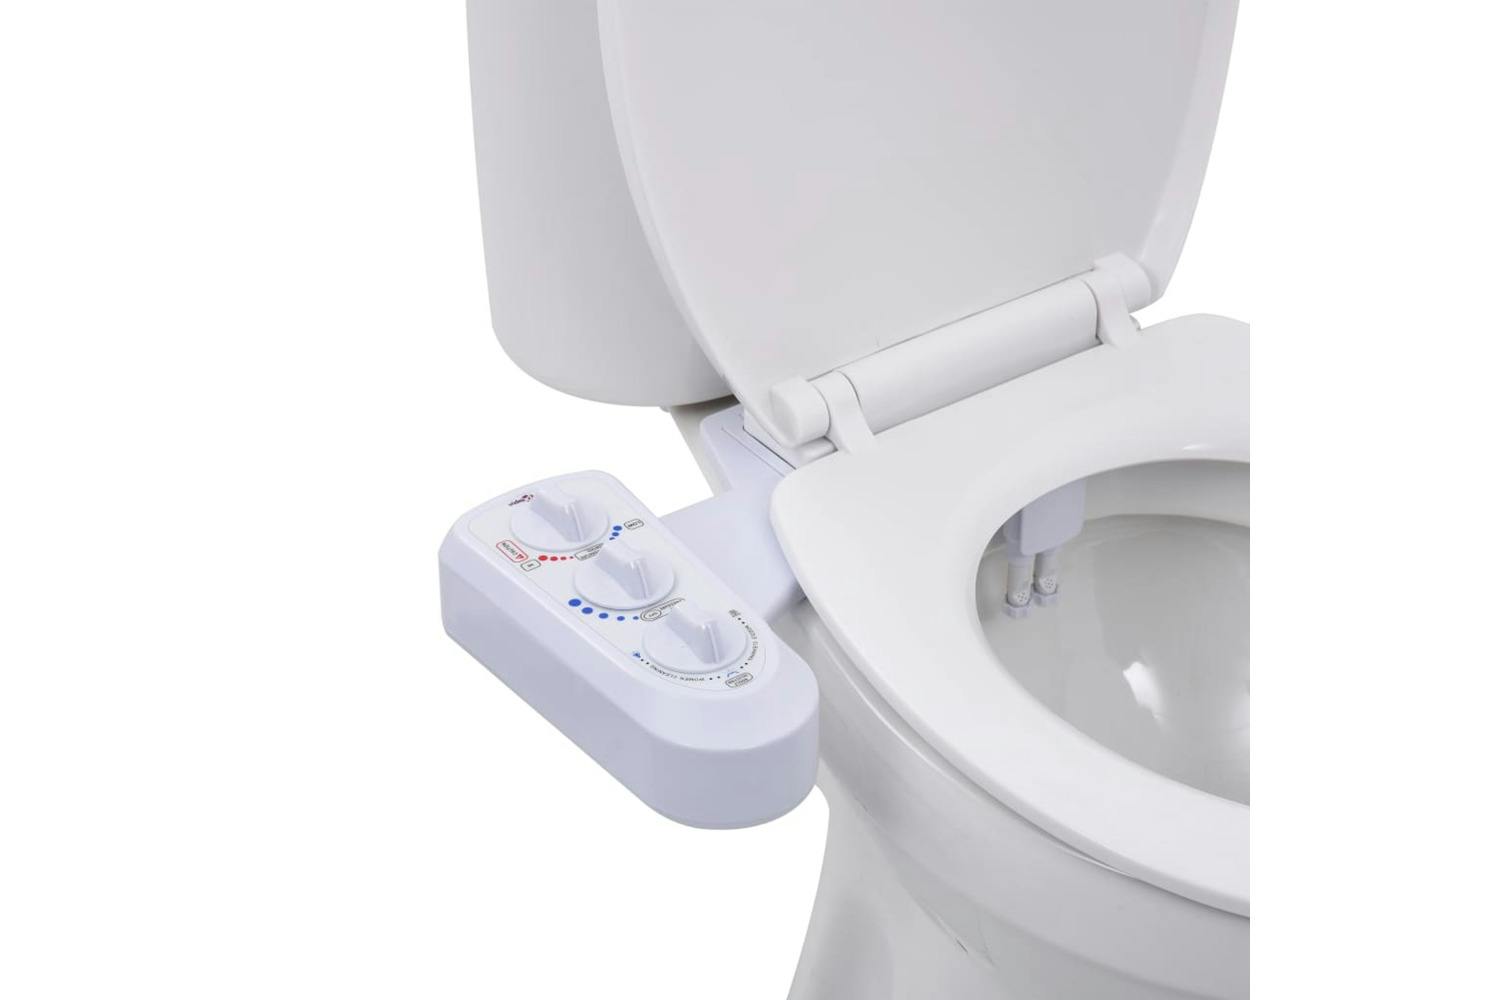 Vidaxl 145292 Bidet Toilet Seat Attachment Hot Cold Water Dual Nozzles